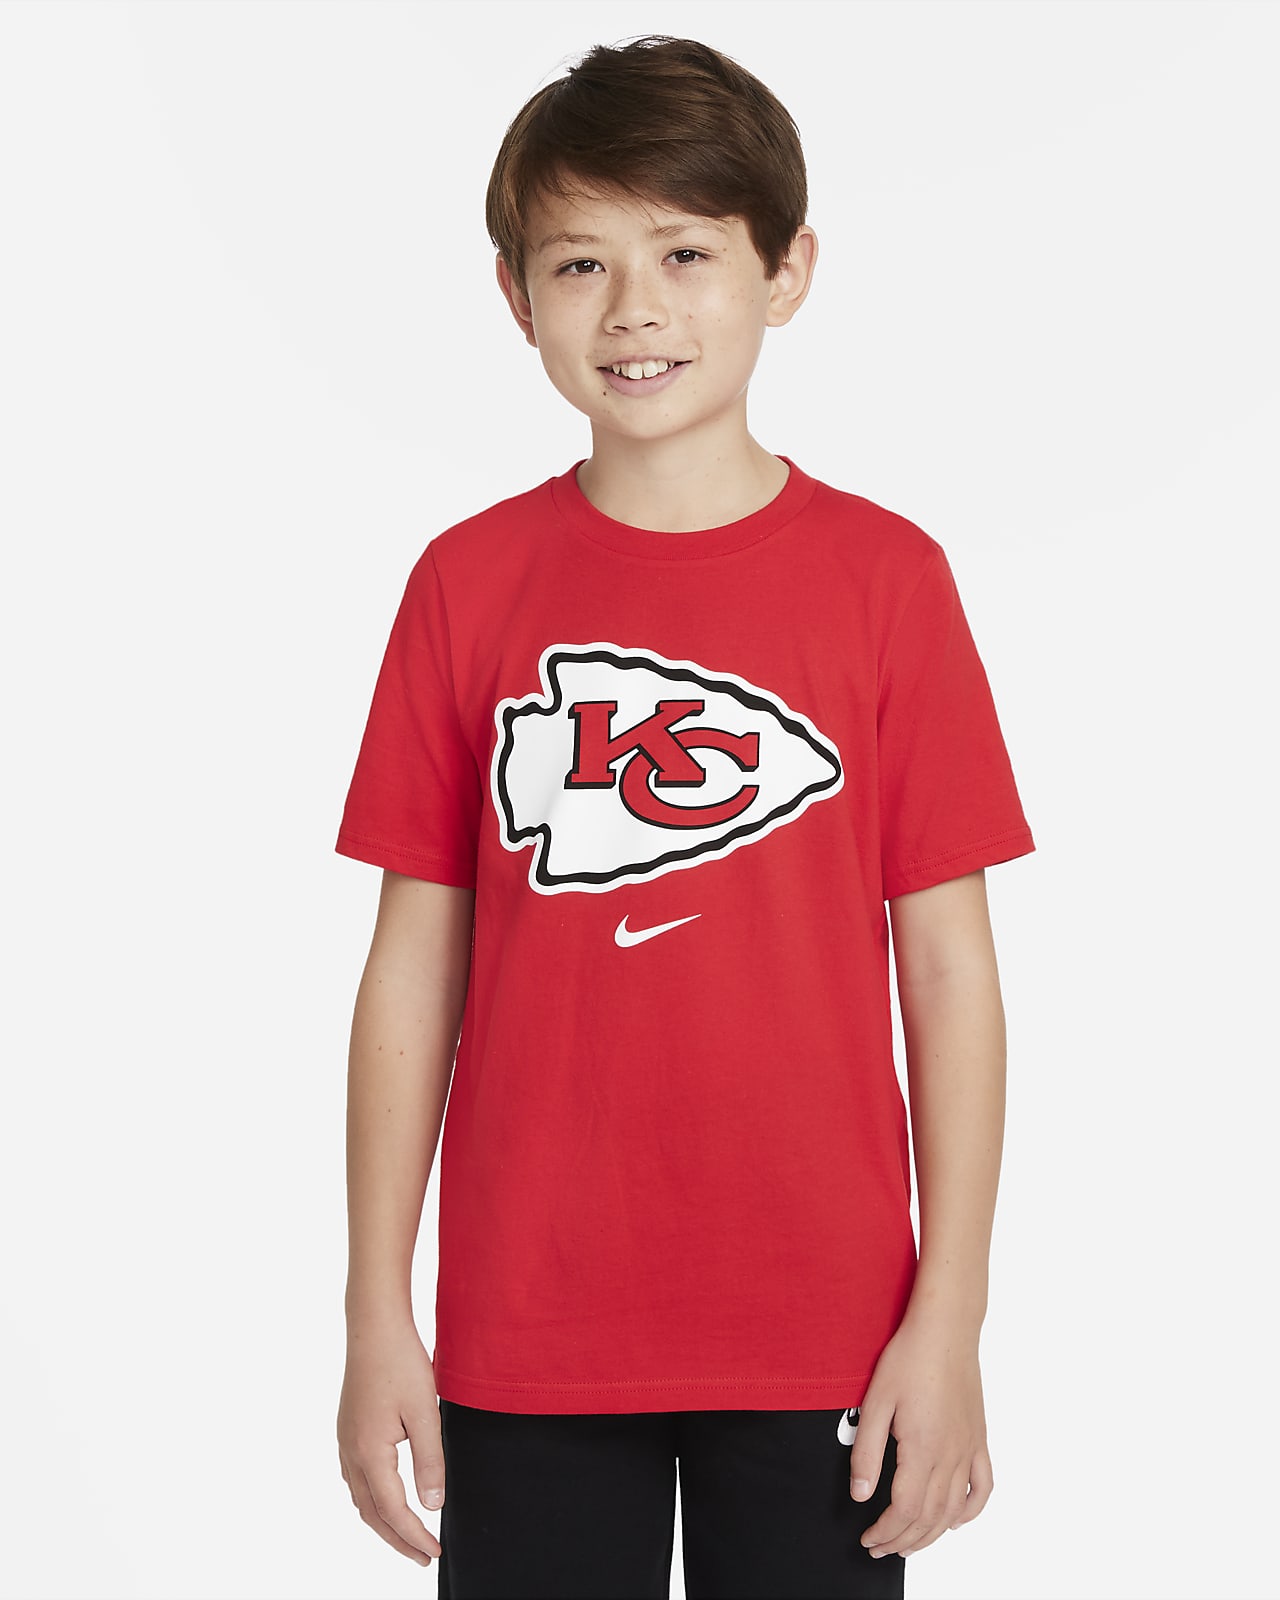 Nike (NFL Kansas City Chiefs) Samarreta - Nen/a